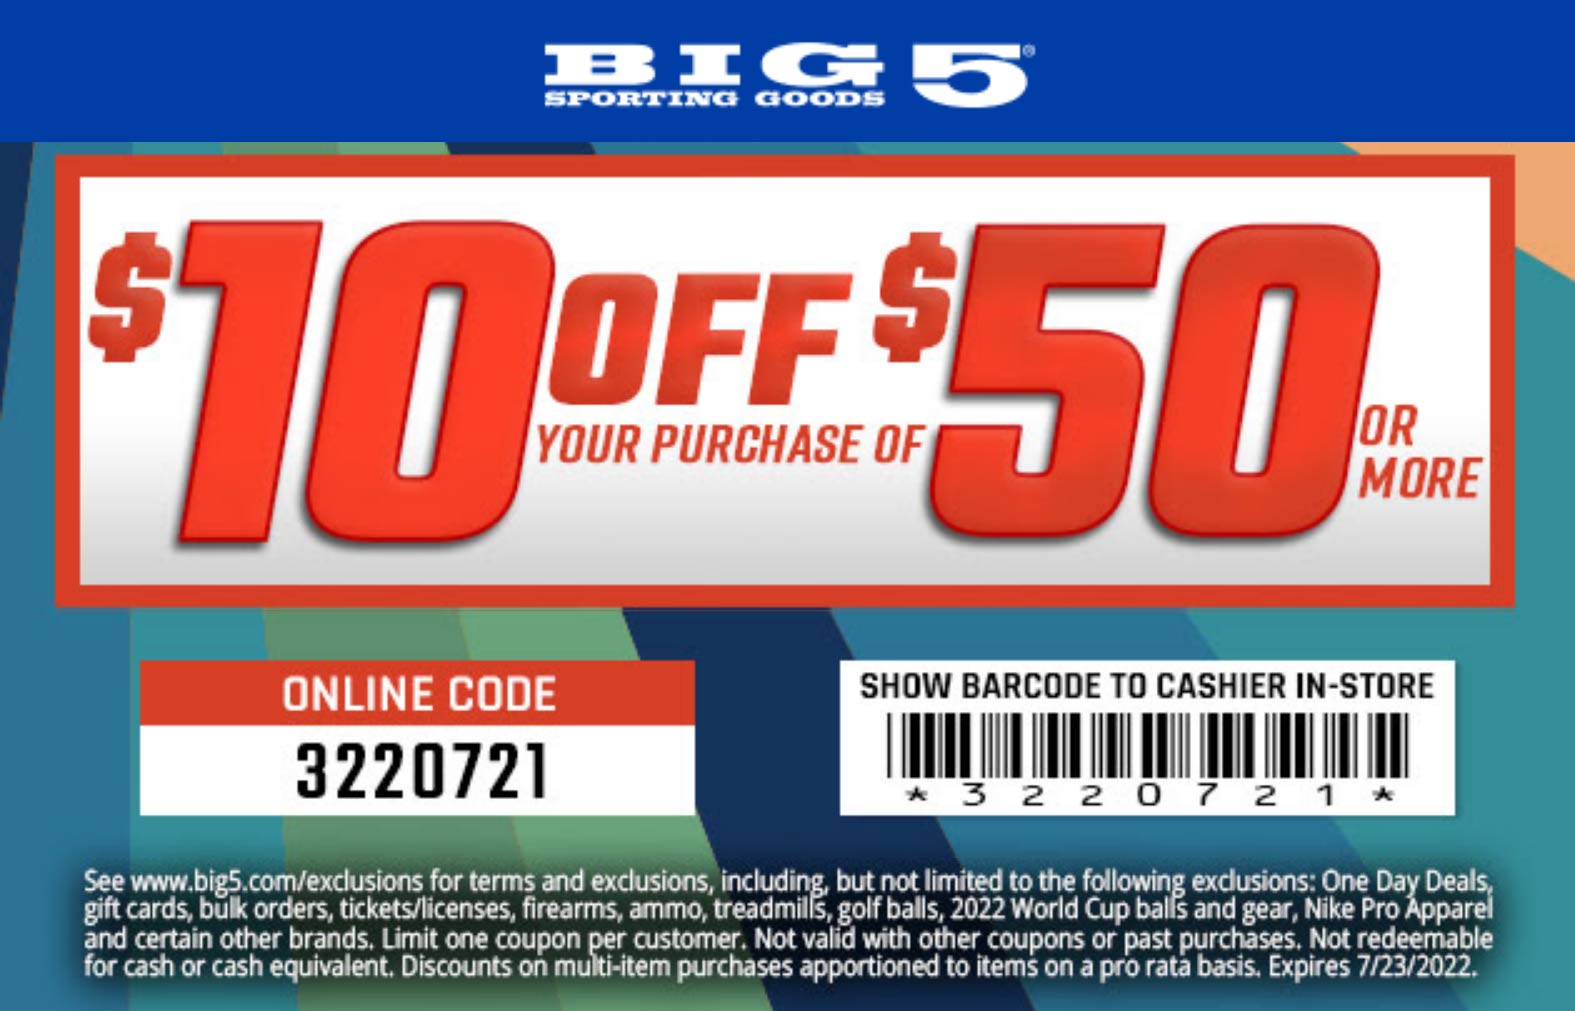 Big 5 stores Coupon  $10 off $50 at Big 5 sporting goods, or online via promo code 3220721 #big5 